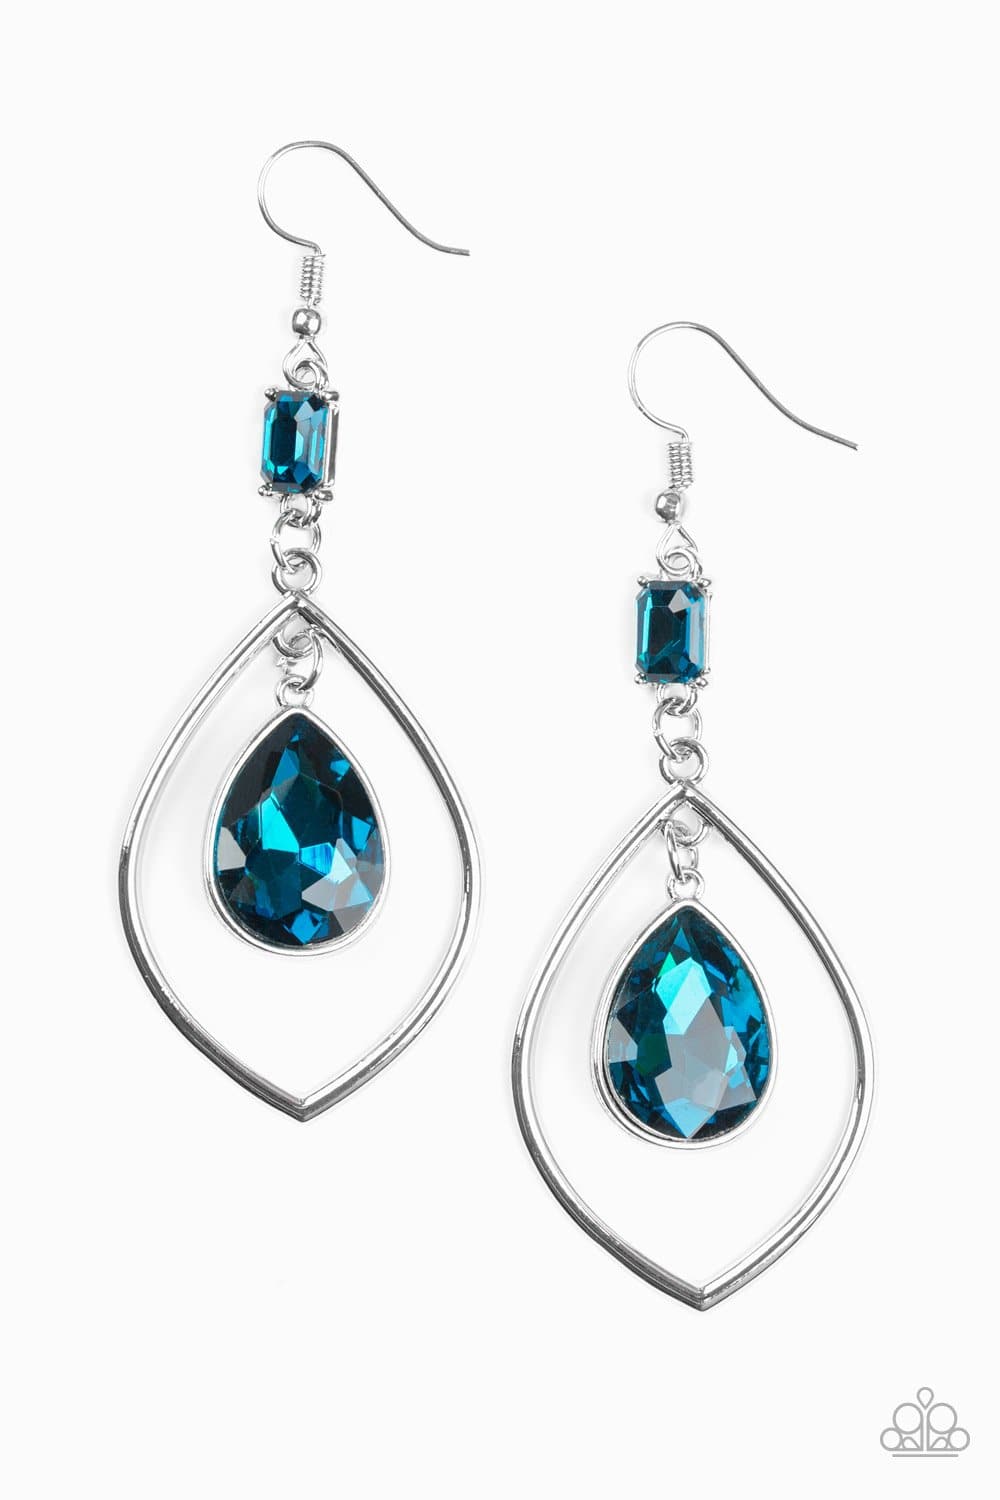 Priceless - Blue Gem Earrings - Paparazzi Accessories - GlaMarous Titi Jewels